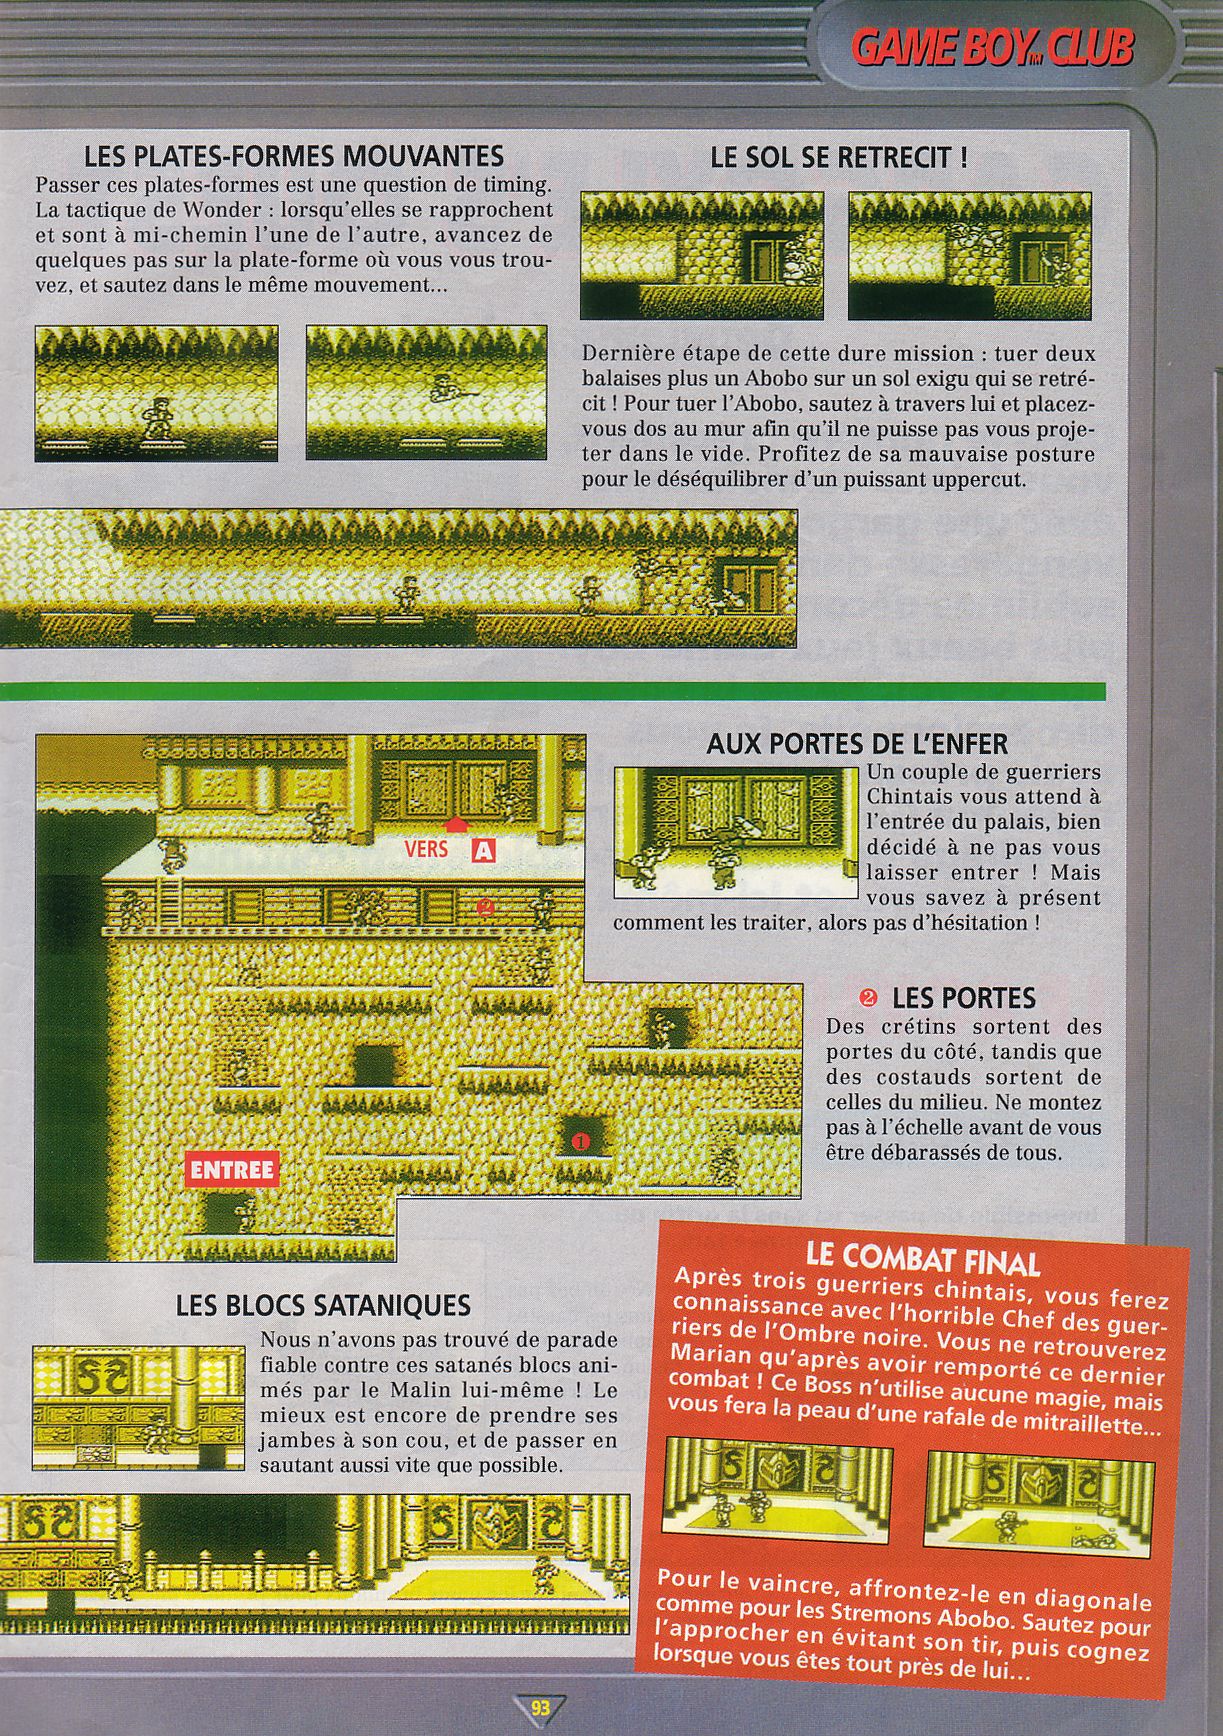 tests//695/Nintendo Player 005 - Page 093 (1992-07-08).jpg